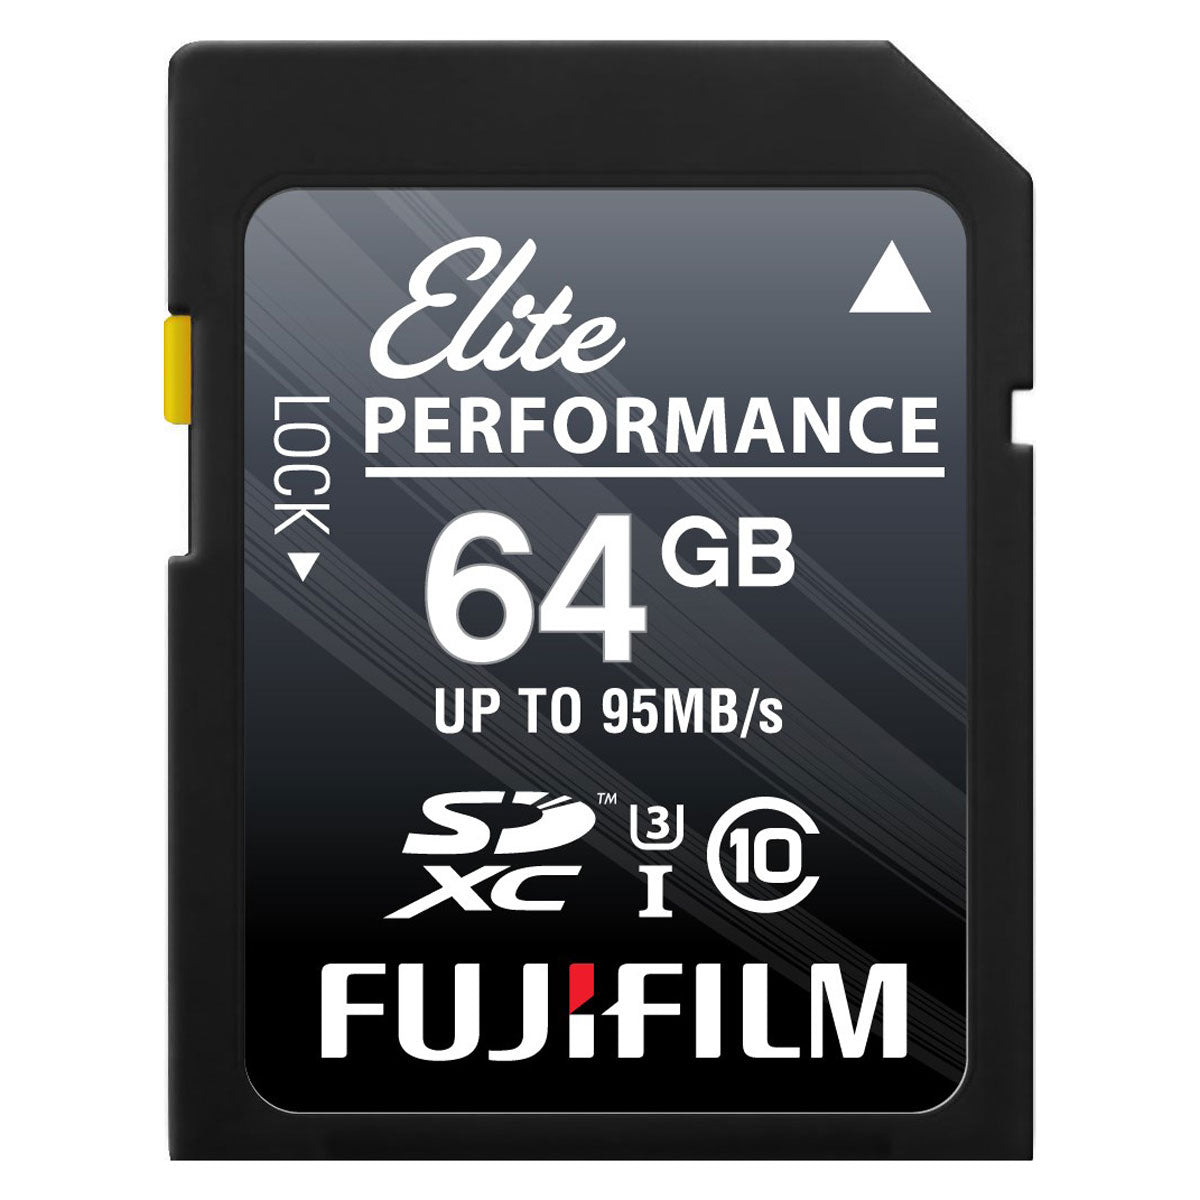 Fujifilm 64GB Elite II Performance UHS-II SDXC Memory Card